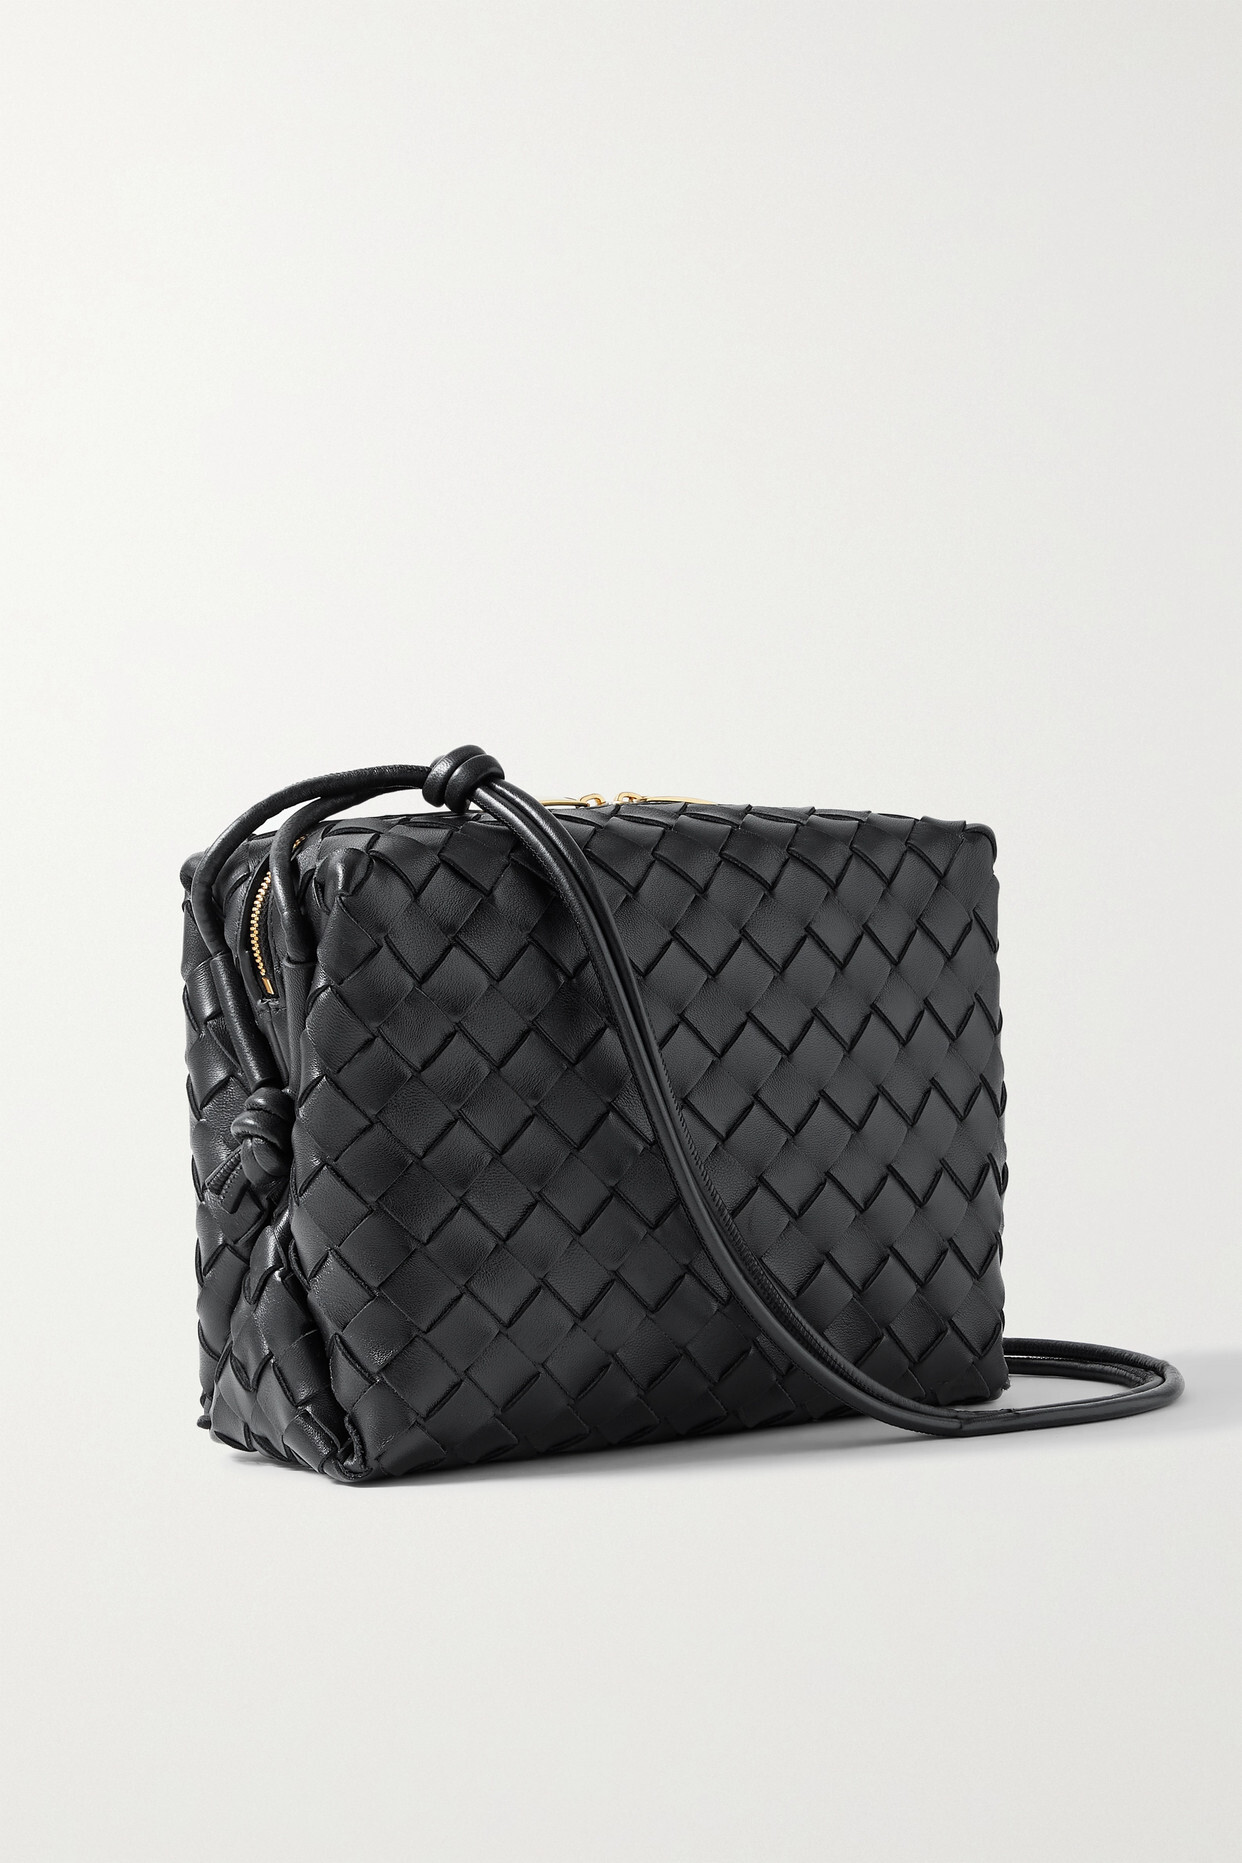 Bottega Veneta - Loop Small Intrecciato Leather Shoulder Bag - Black